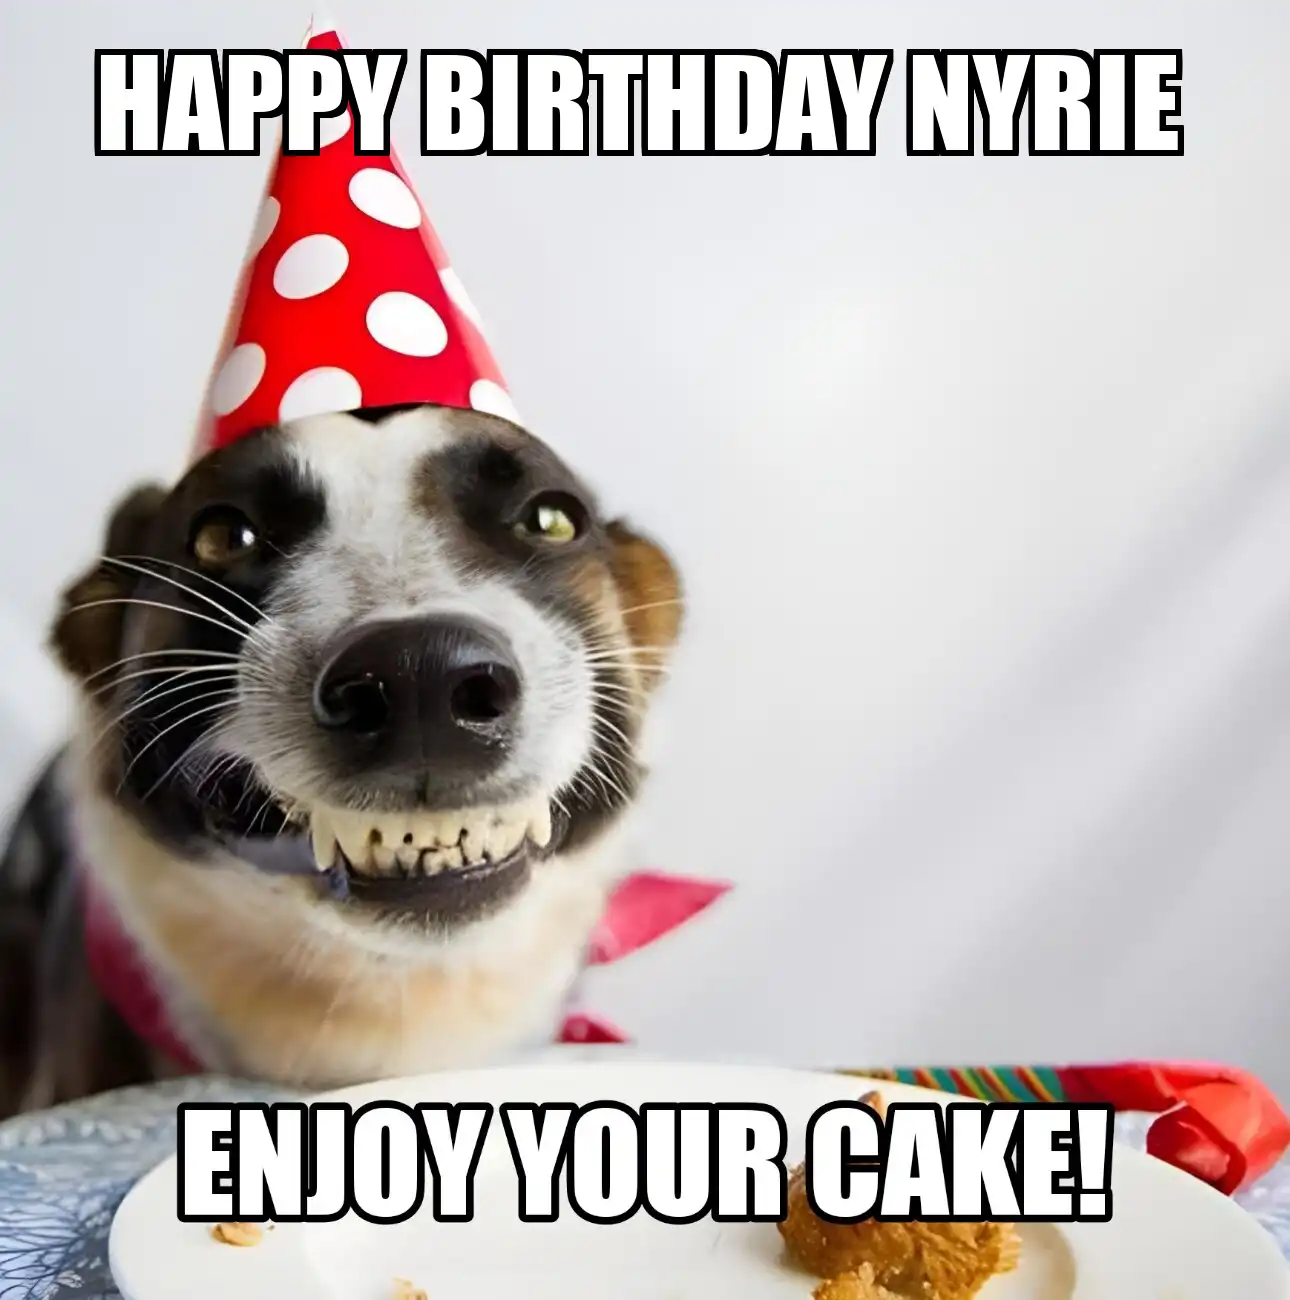 Happy Birthday Nyrie Enjoy Your Cake Dog Meme